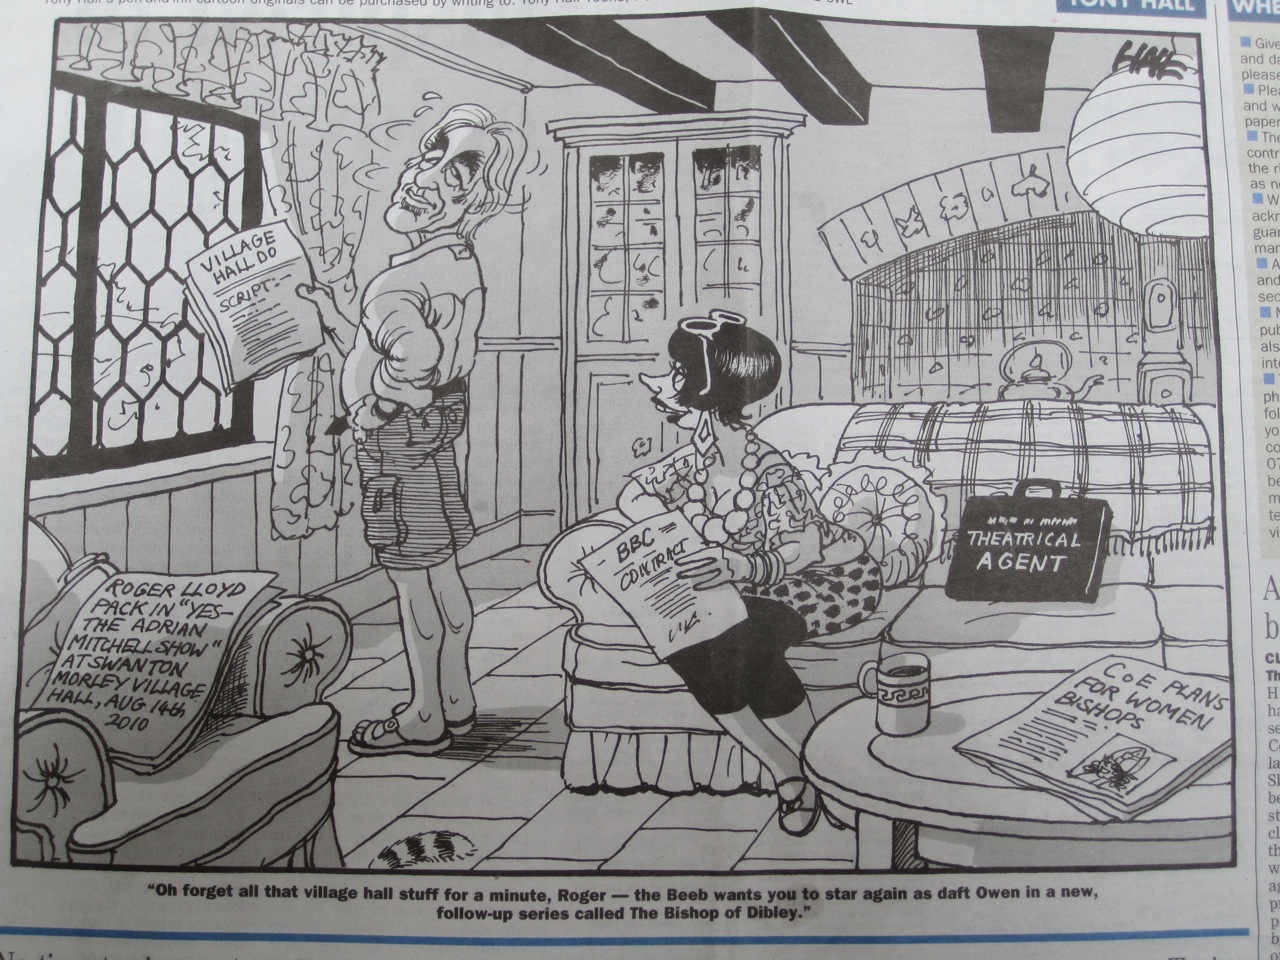 Kentish Town newspaper cartoon about Vicar of Dibley